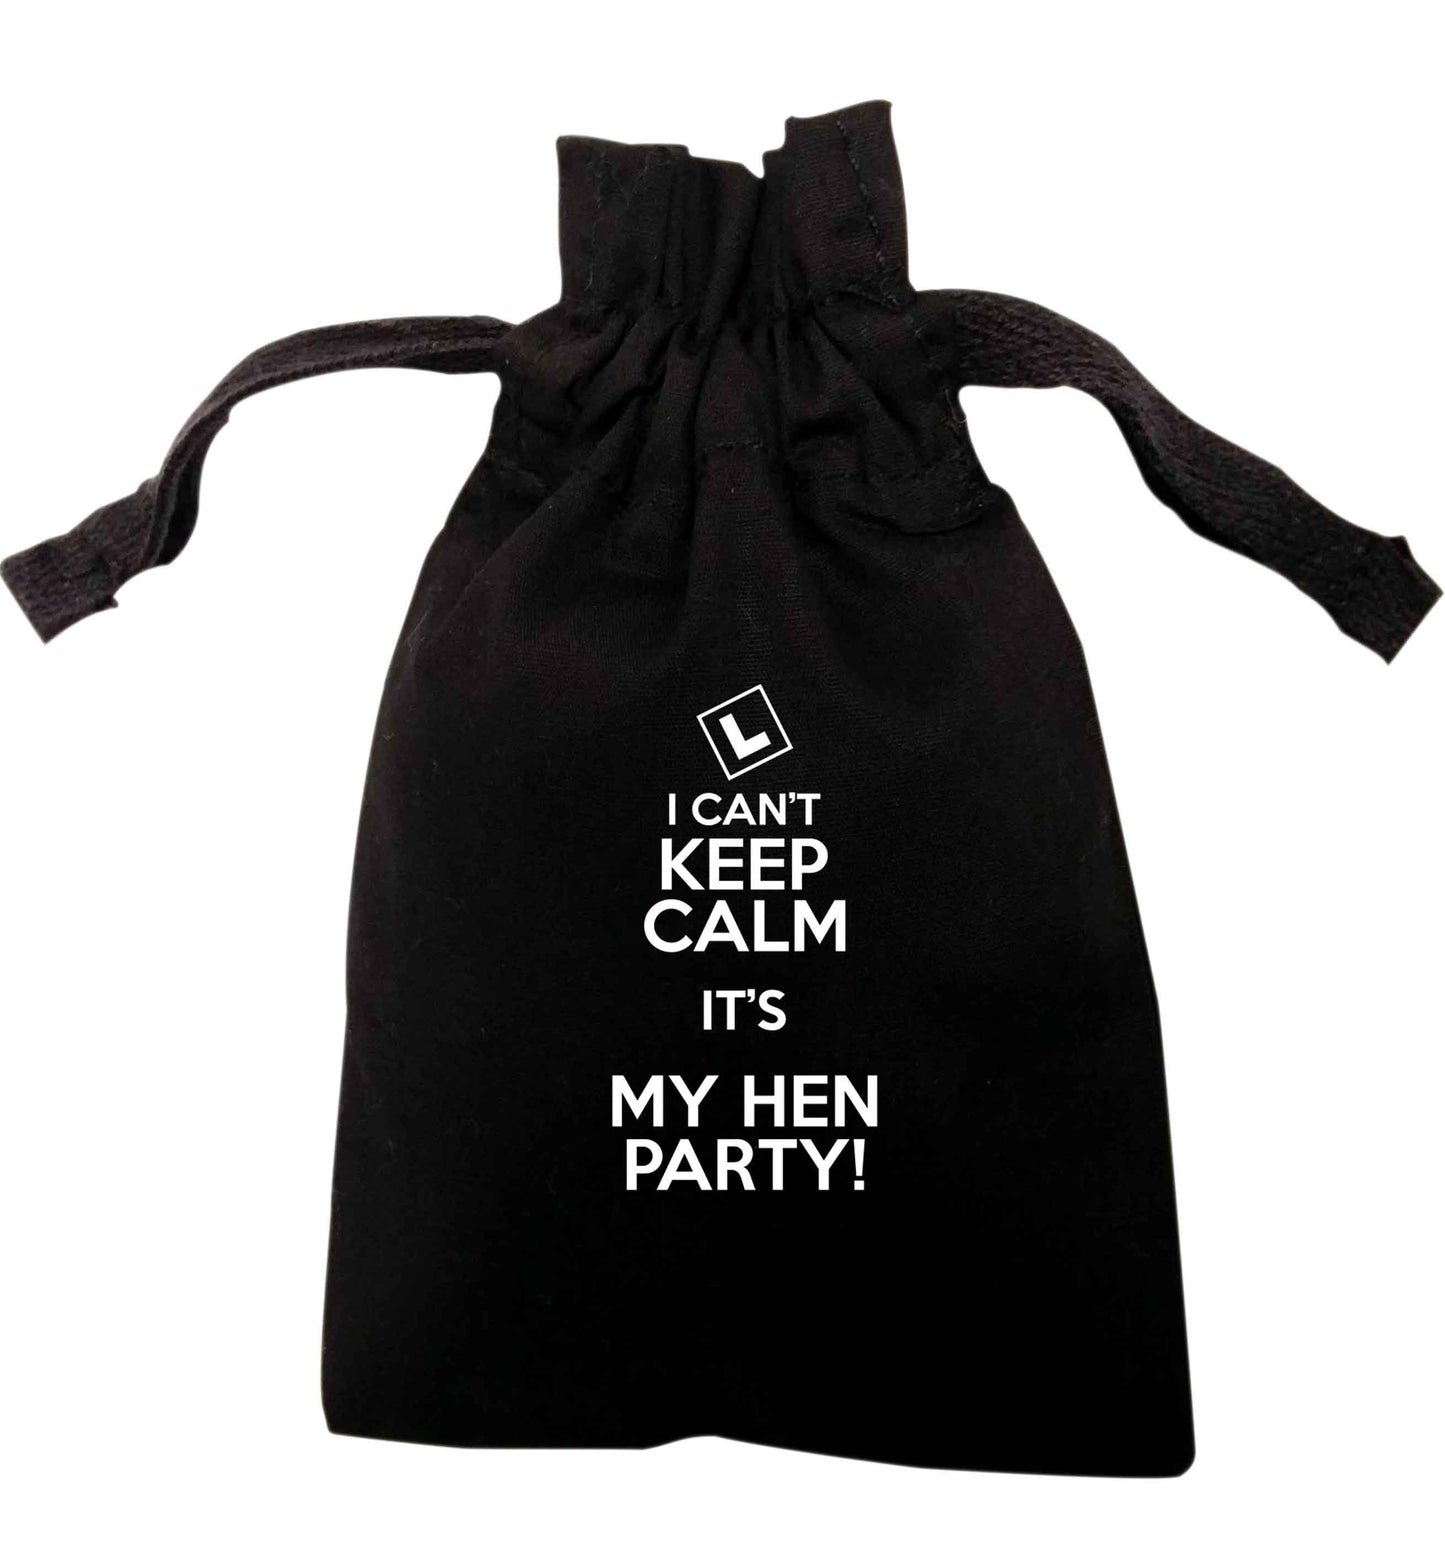 I can't keep calm it's my hen party | XS - L | Pouch / Drawstring bag / Sack | Organic Cotton | Bulk discounts available!